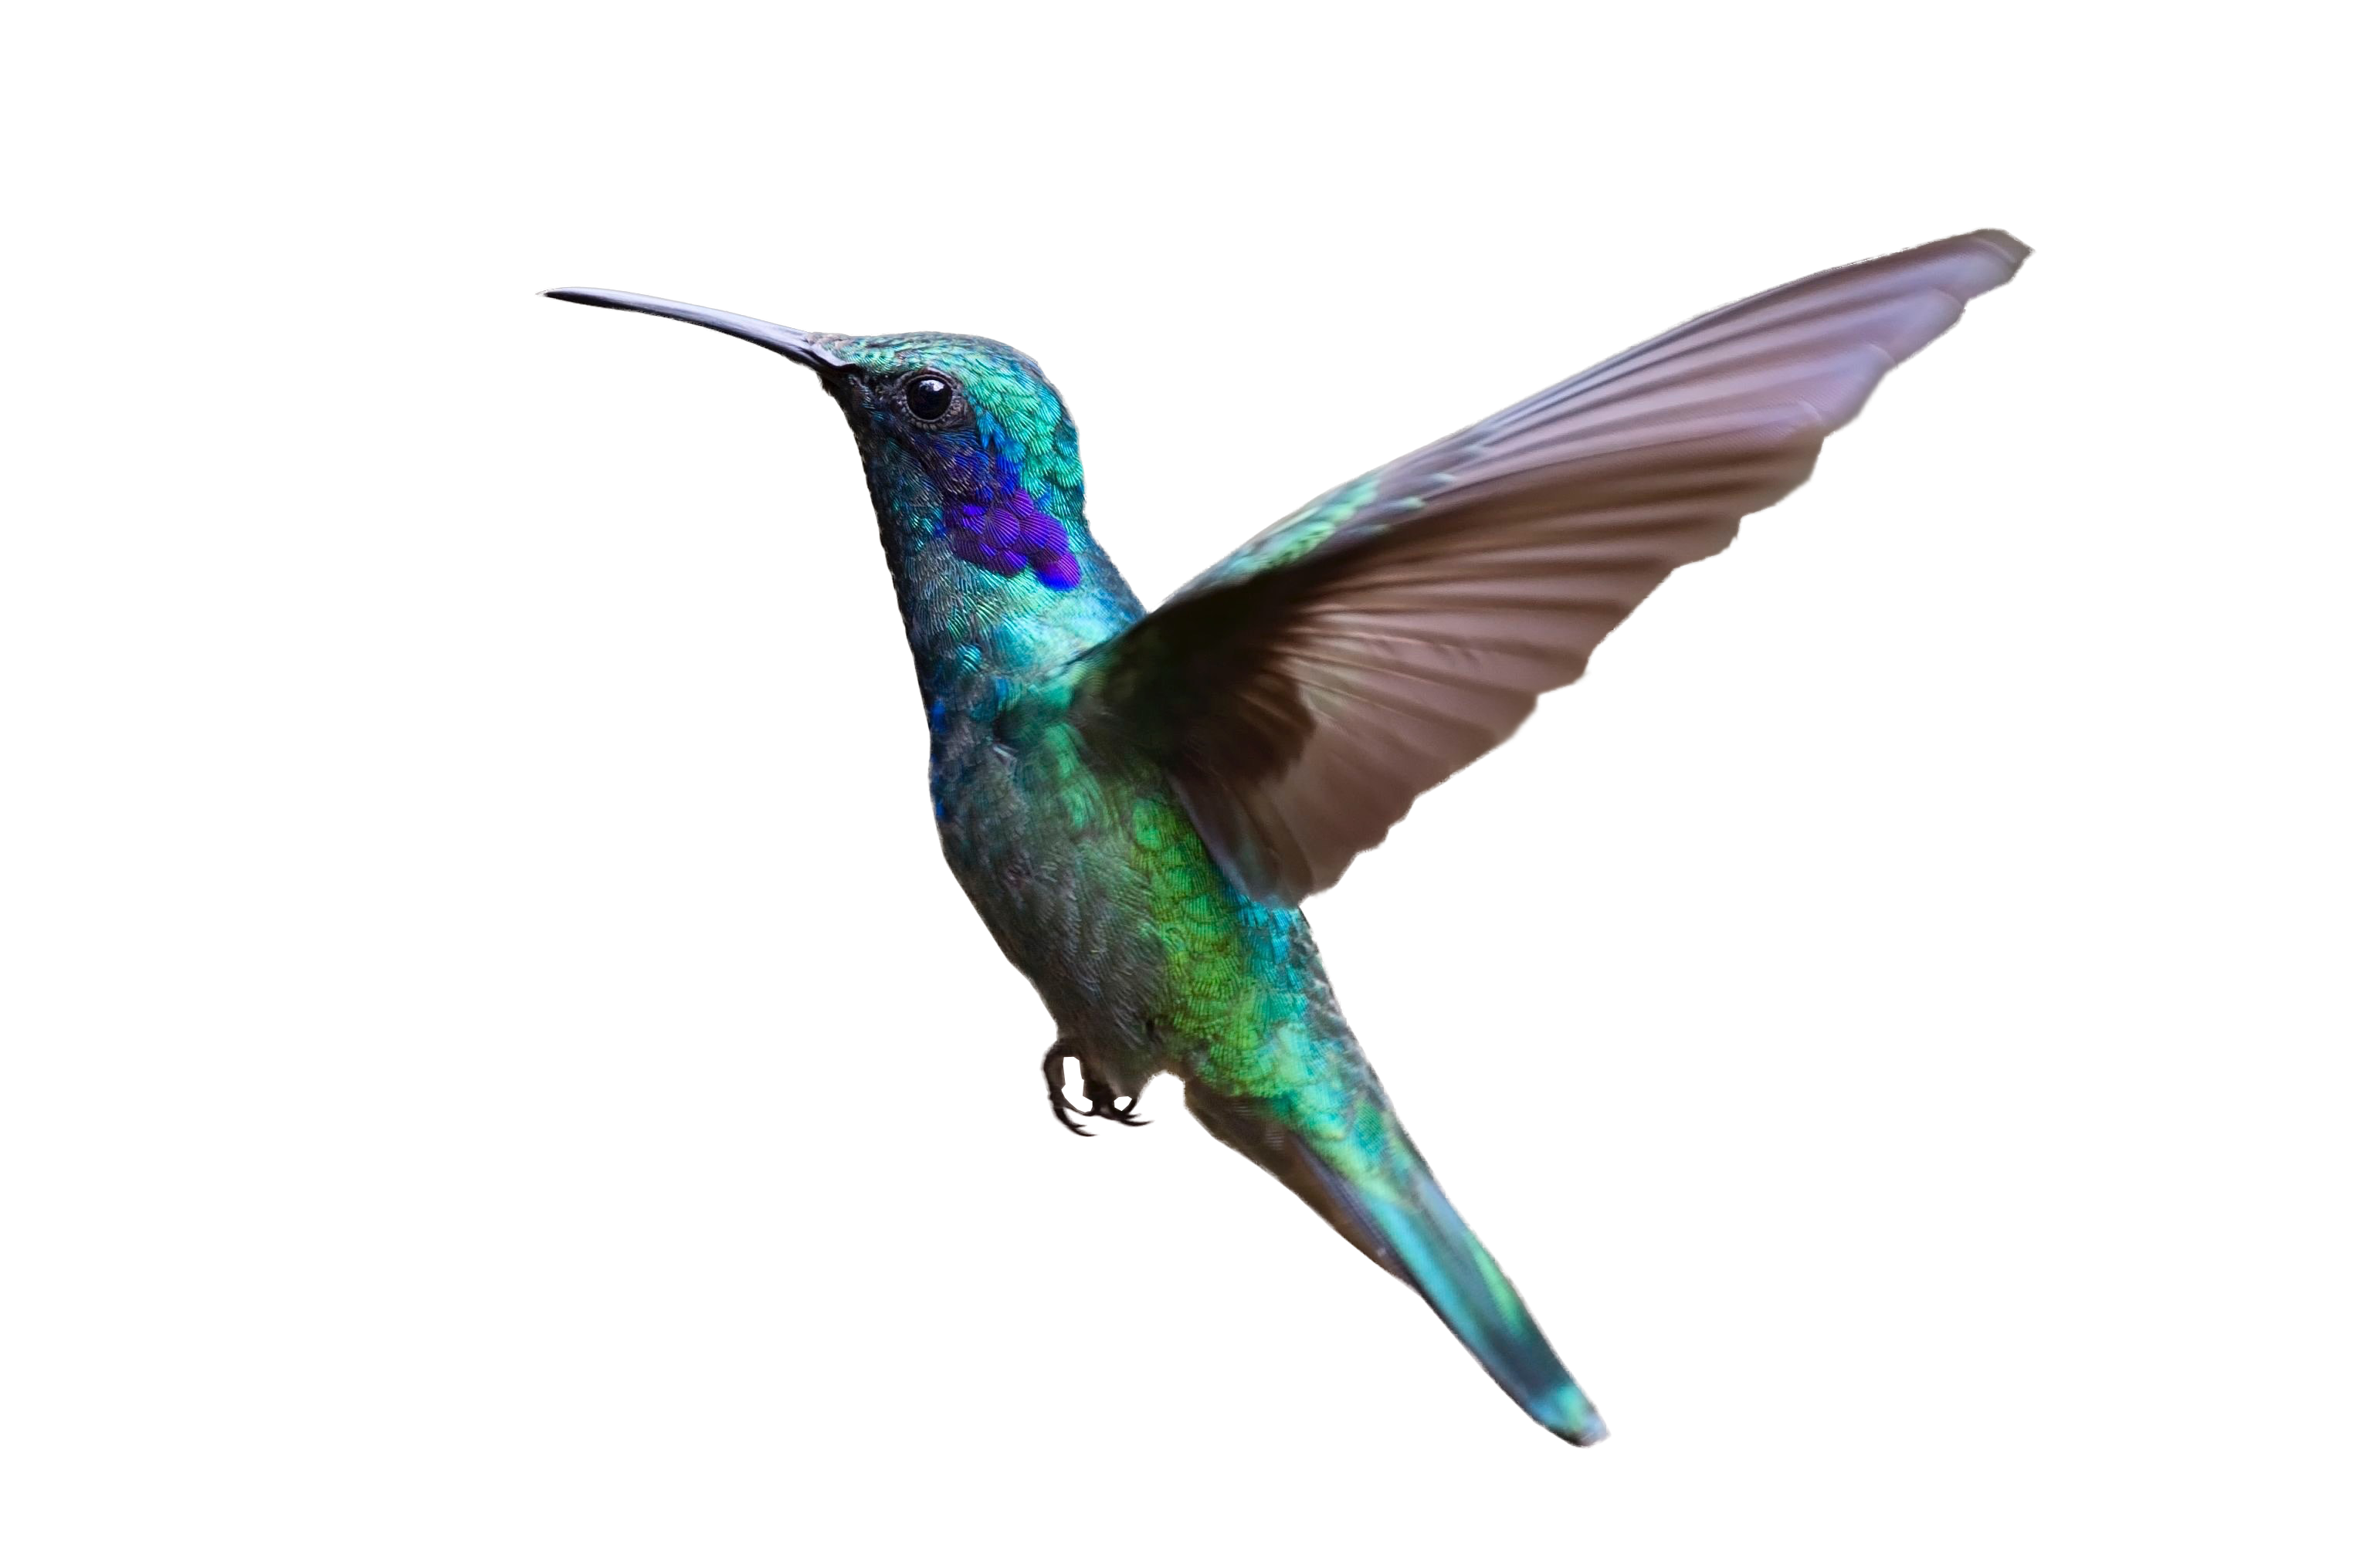 Colorful Hummingbird Flying PNG Image - PurePNG | Free transparent ...